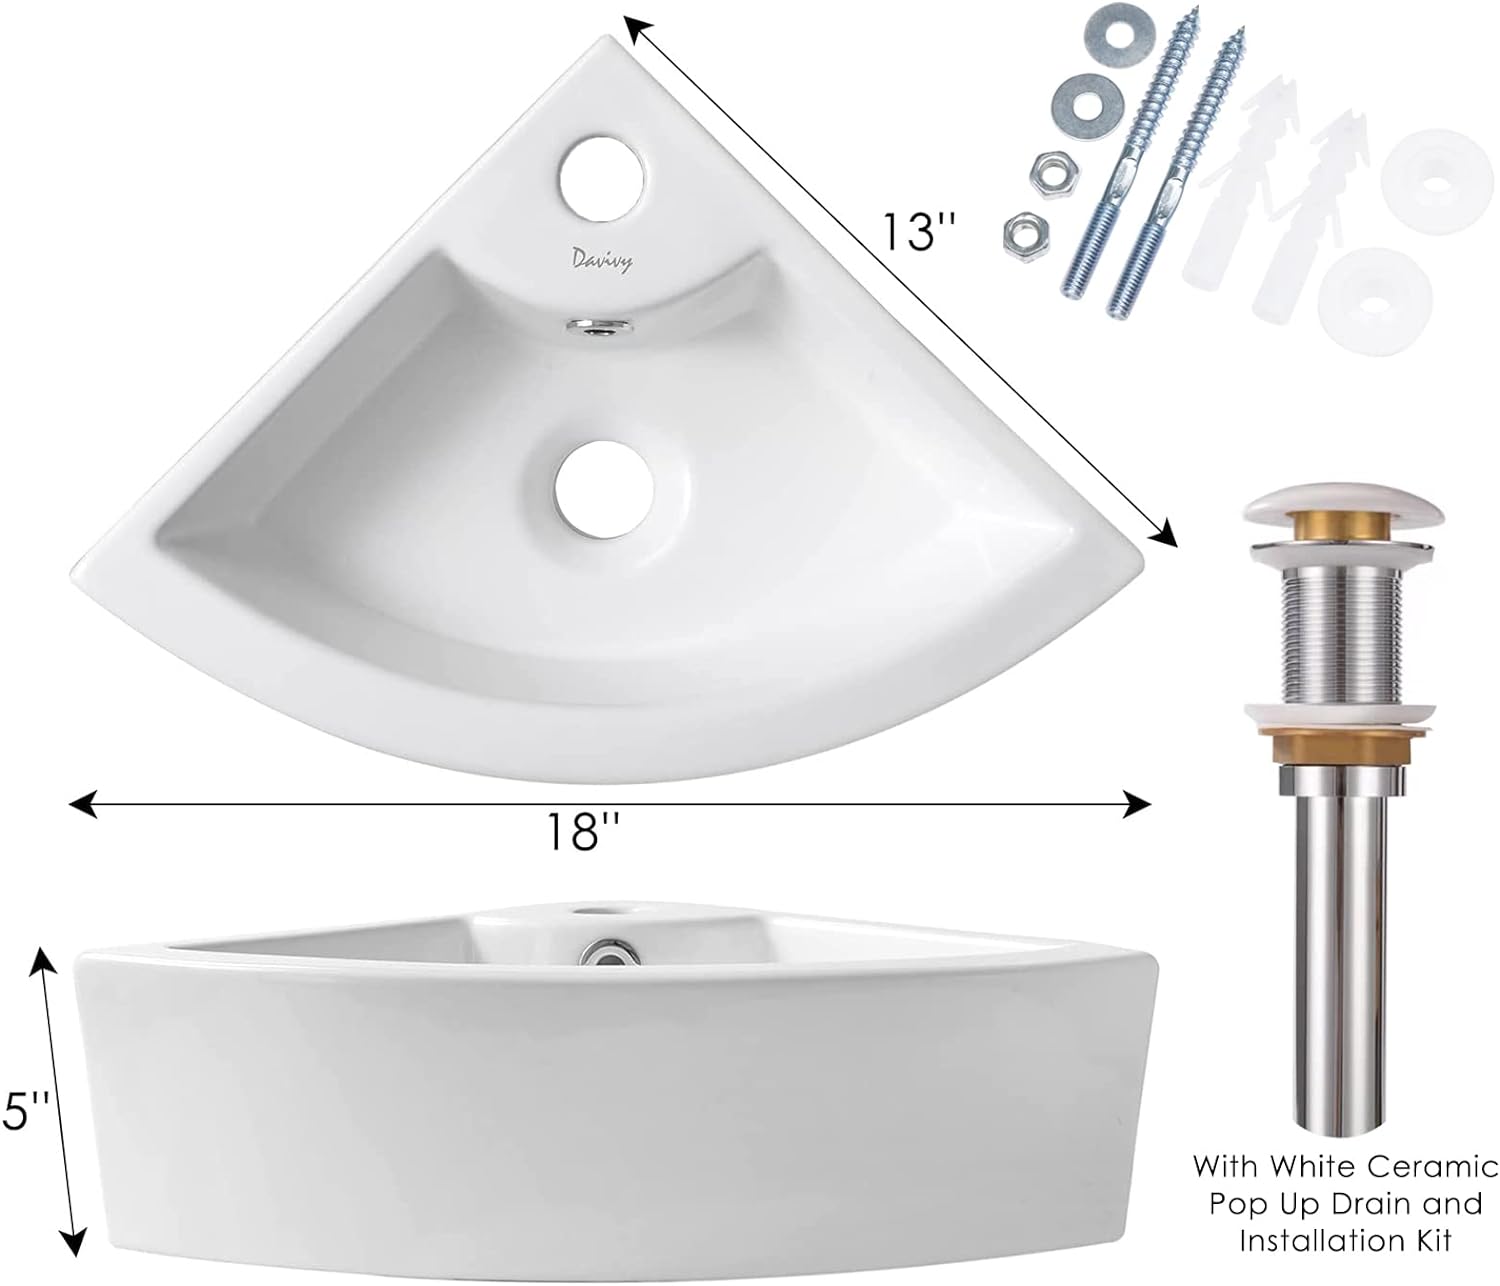 Davivy 18" x 13" Corner Bathroom Sink with Pop Up Drain and Installation Kit,Wall Mount Corner Sink,Ceramic Vessel Sink,Smal